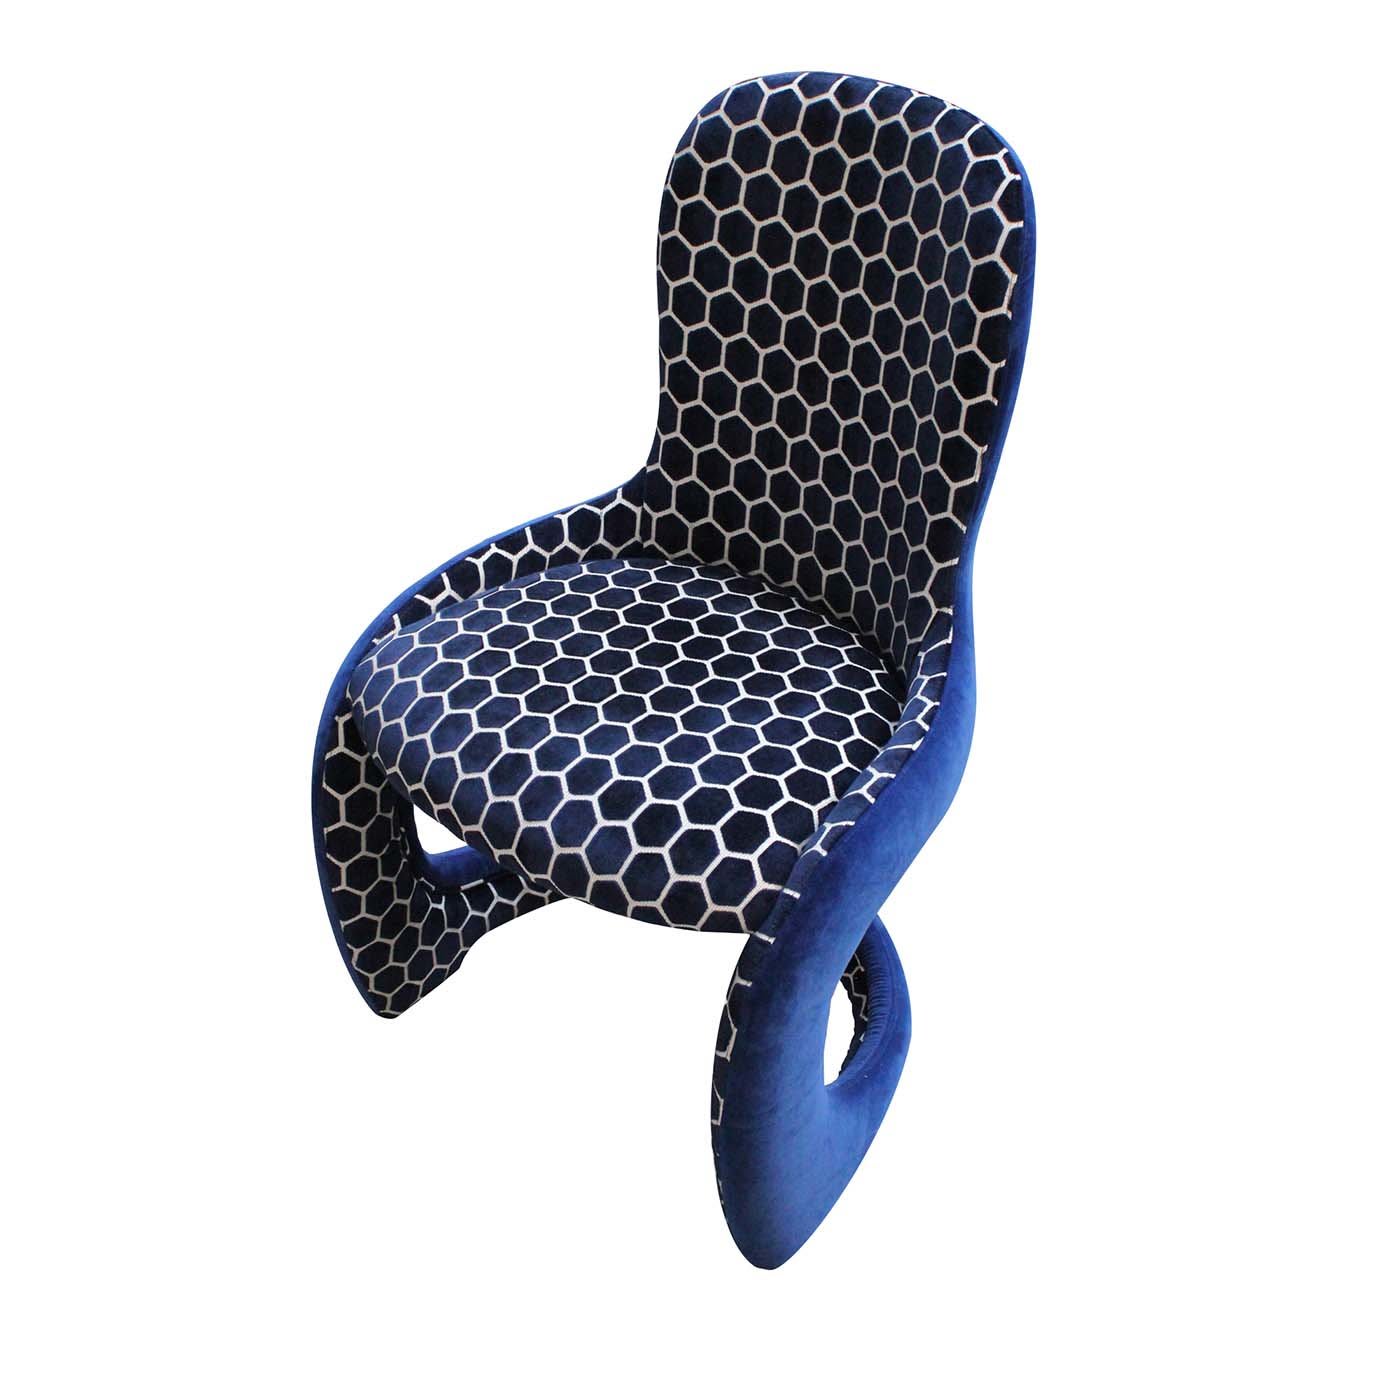 Venere Blue Padded Chair - Carpanelli